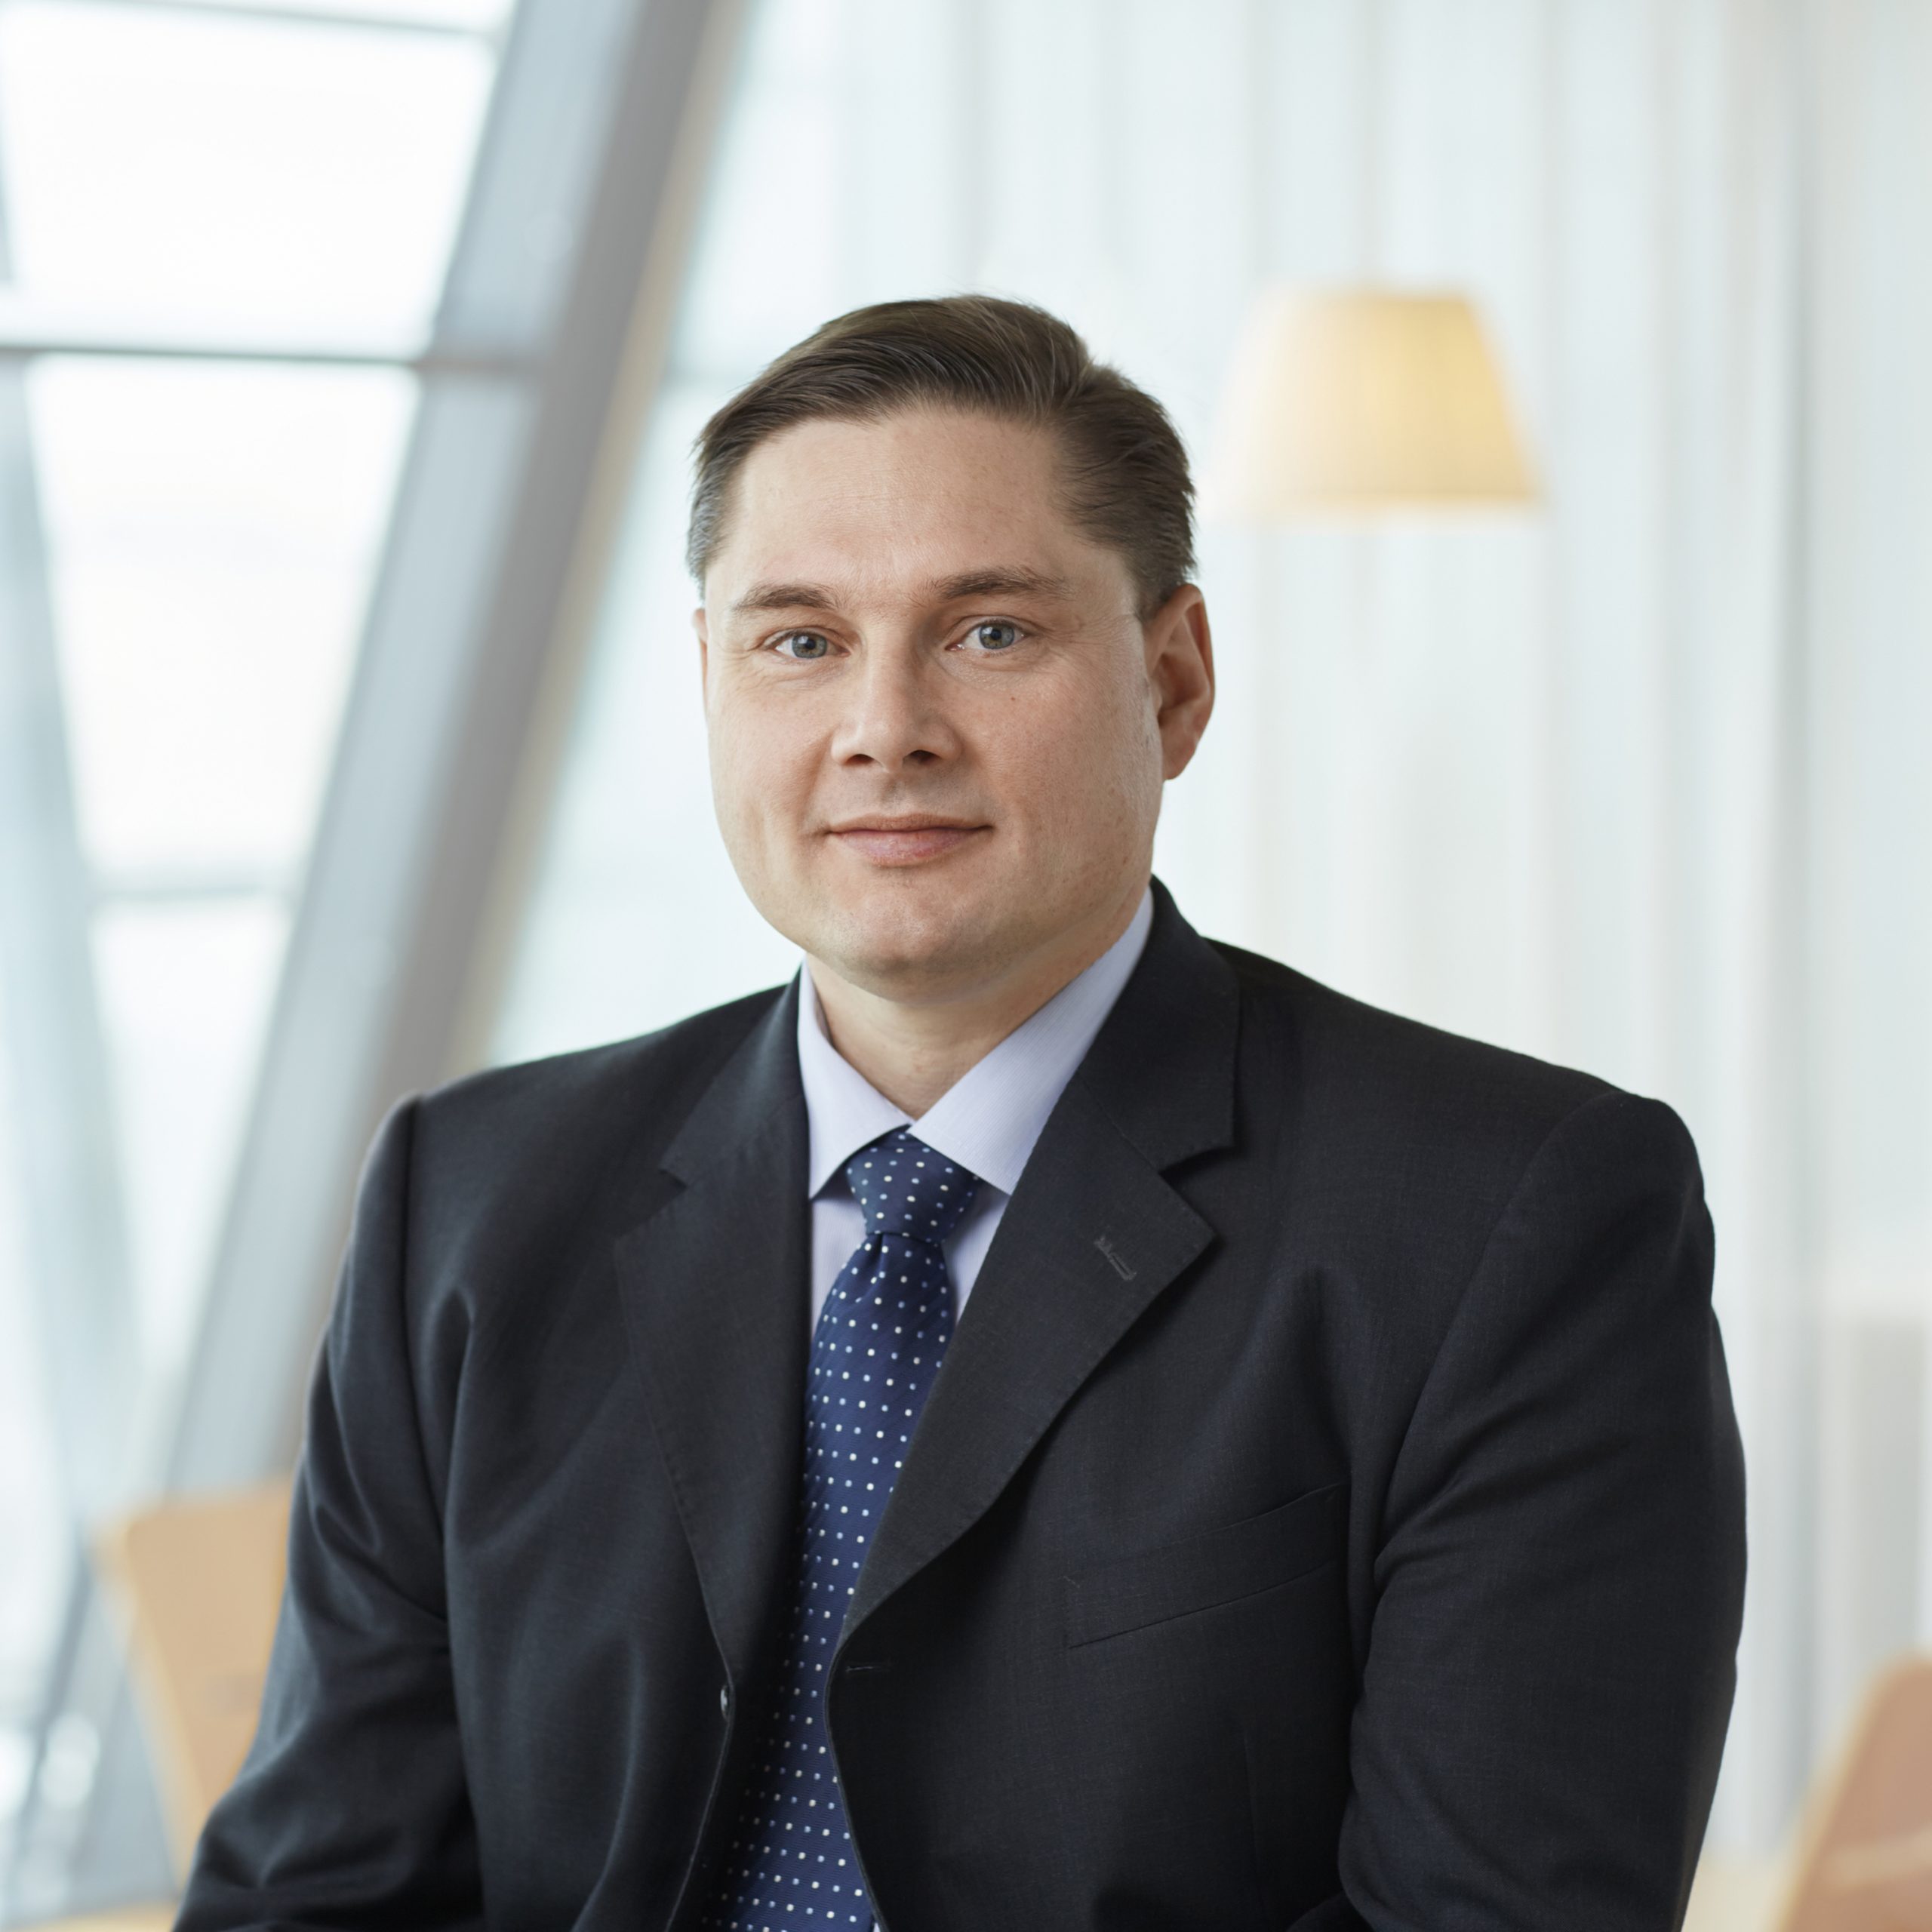 Peter Kjaer Jensen succeeds Henning Christensen as CEO of PostNord Denmark